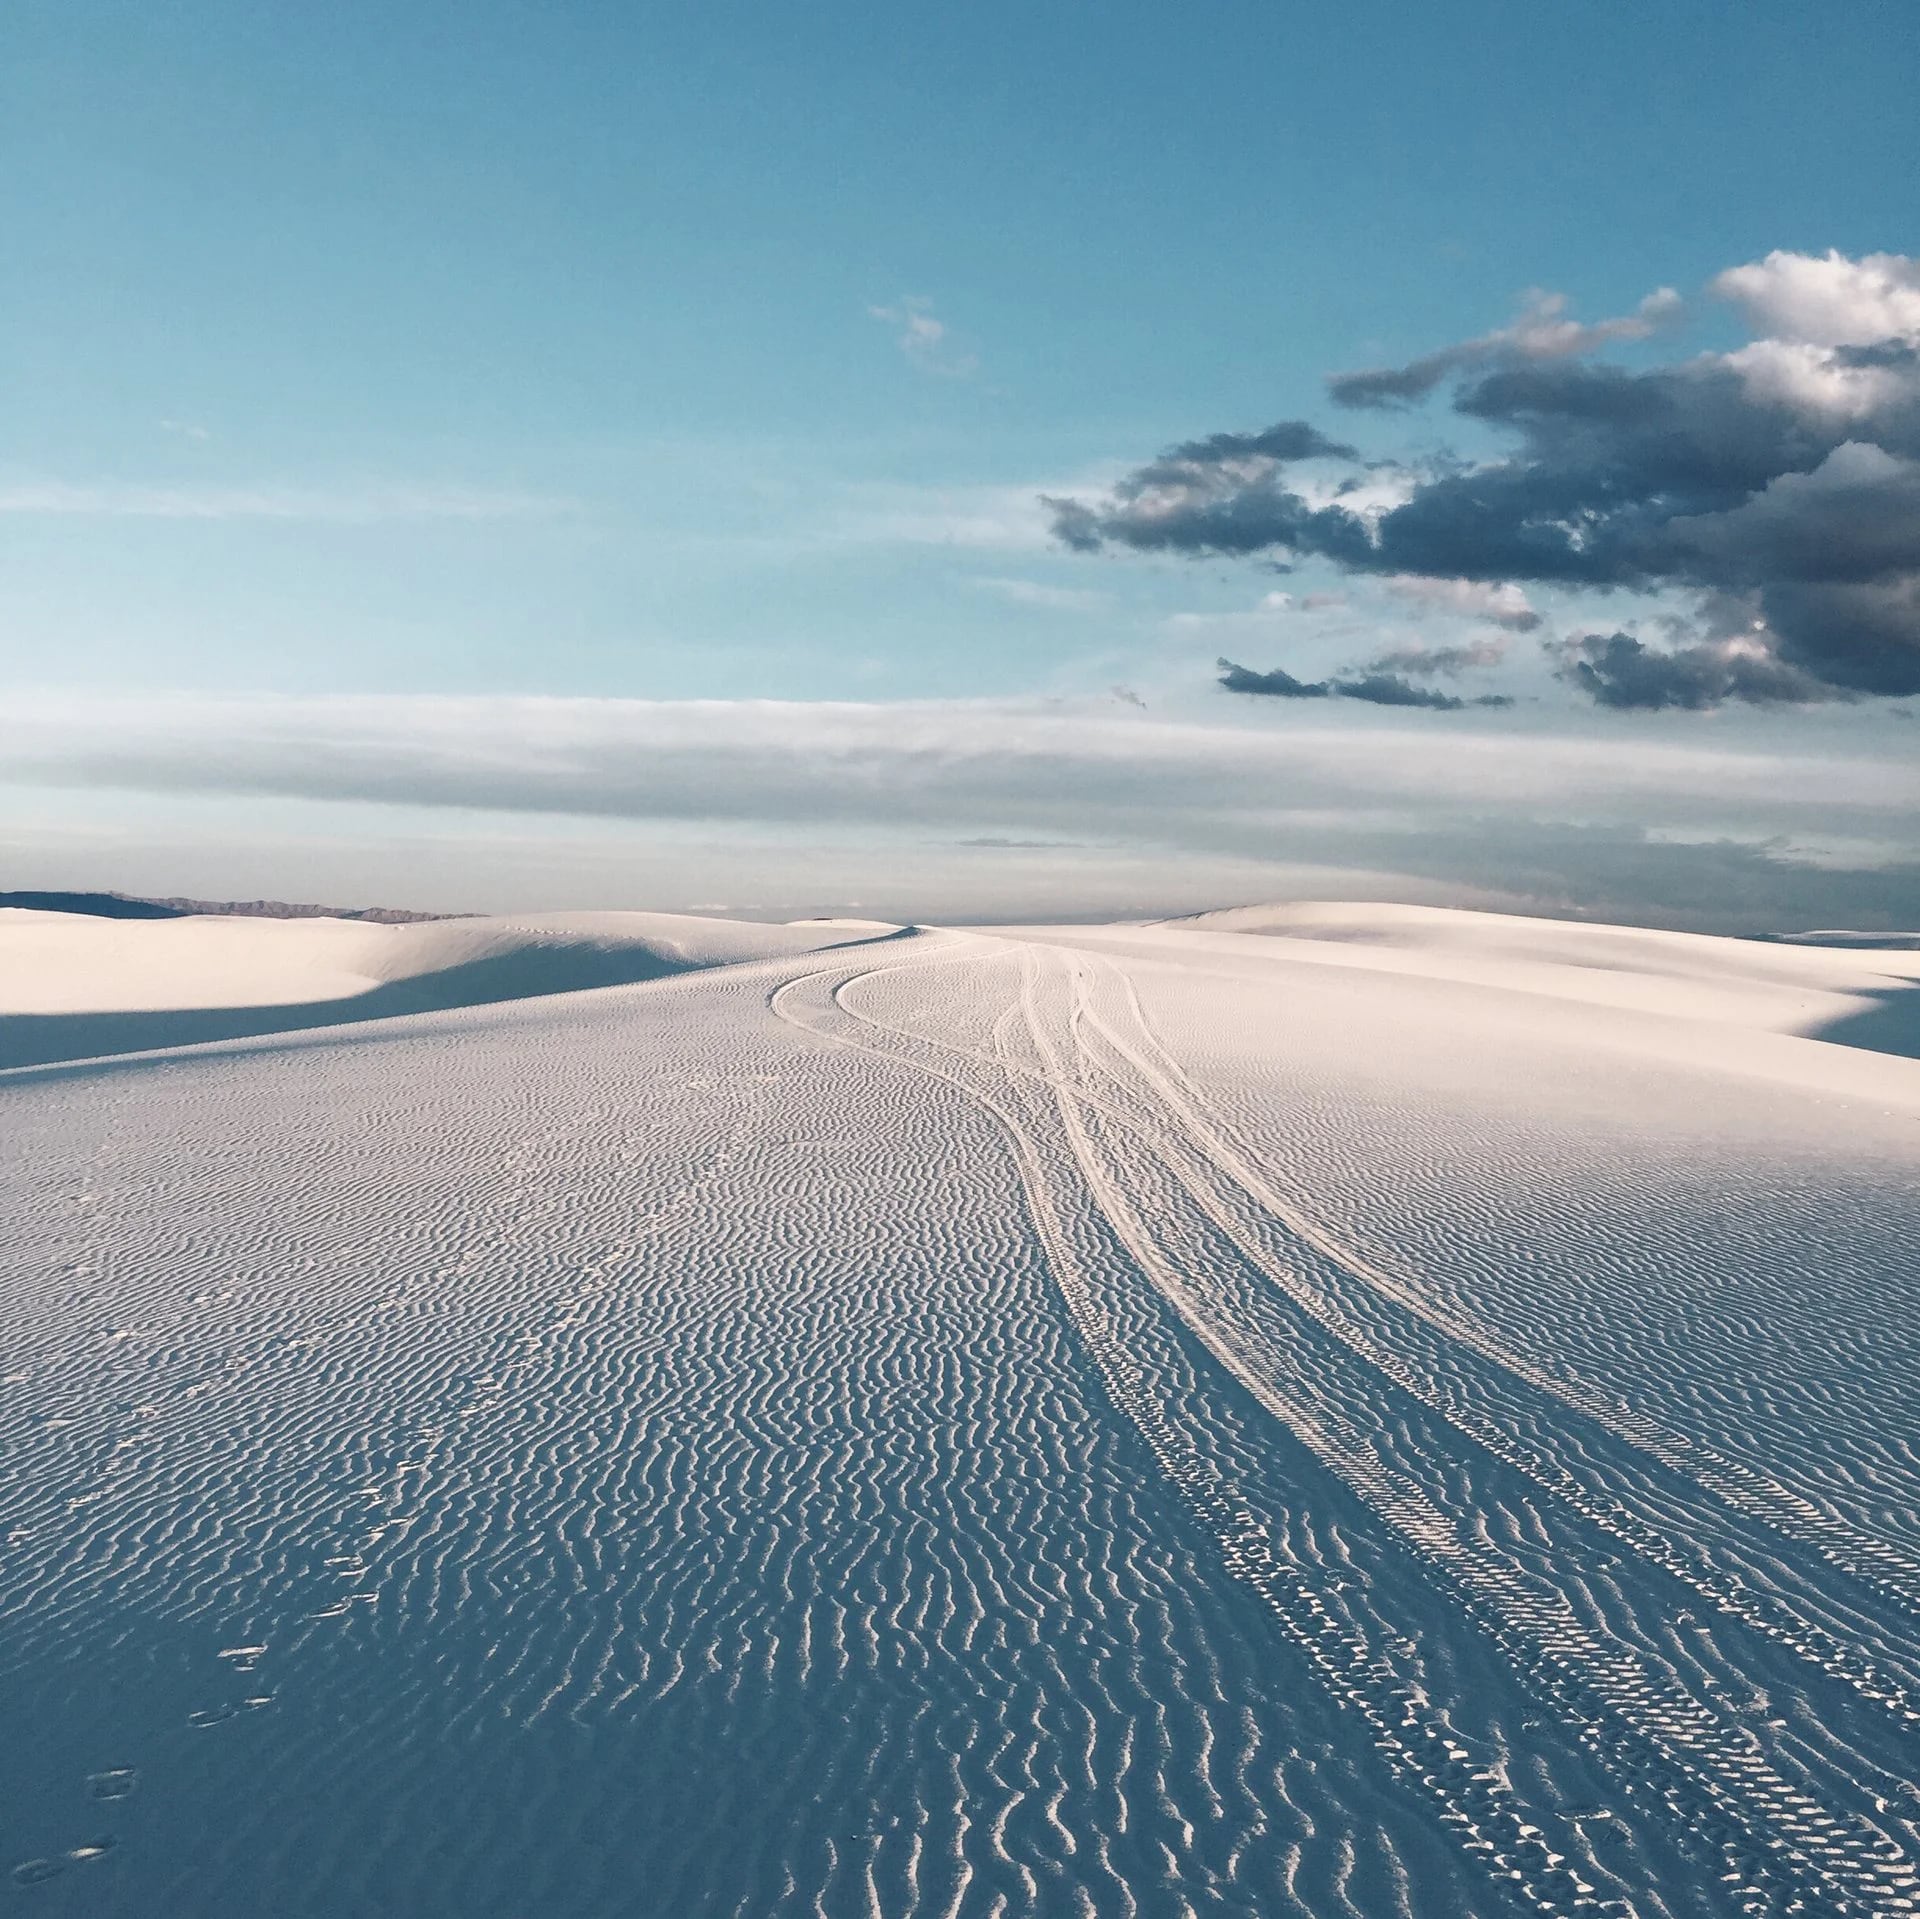 El monumento nacional de White Sands en Nuevo México obtuvo el primer lugar para Junfeng Wang de Shanghai, China, en la categoria Naturaleza (Junfeng Wang)